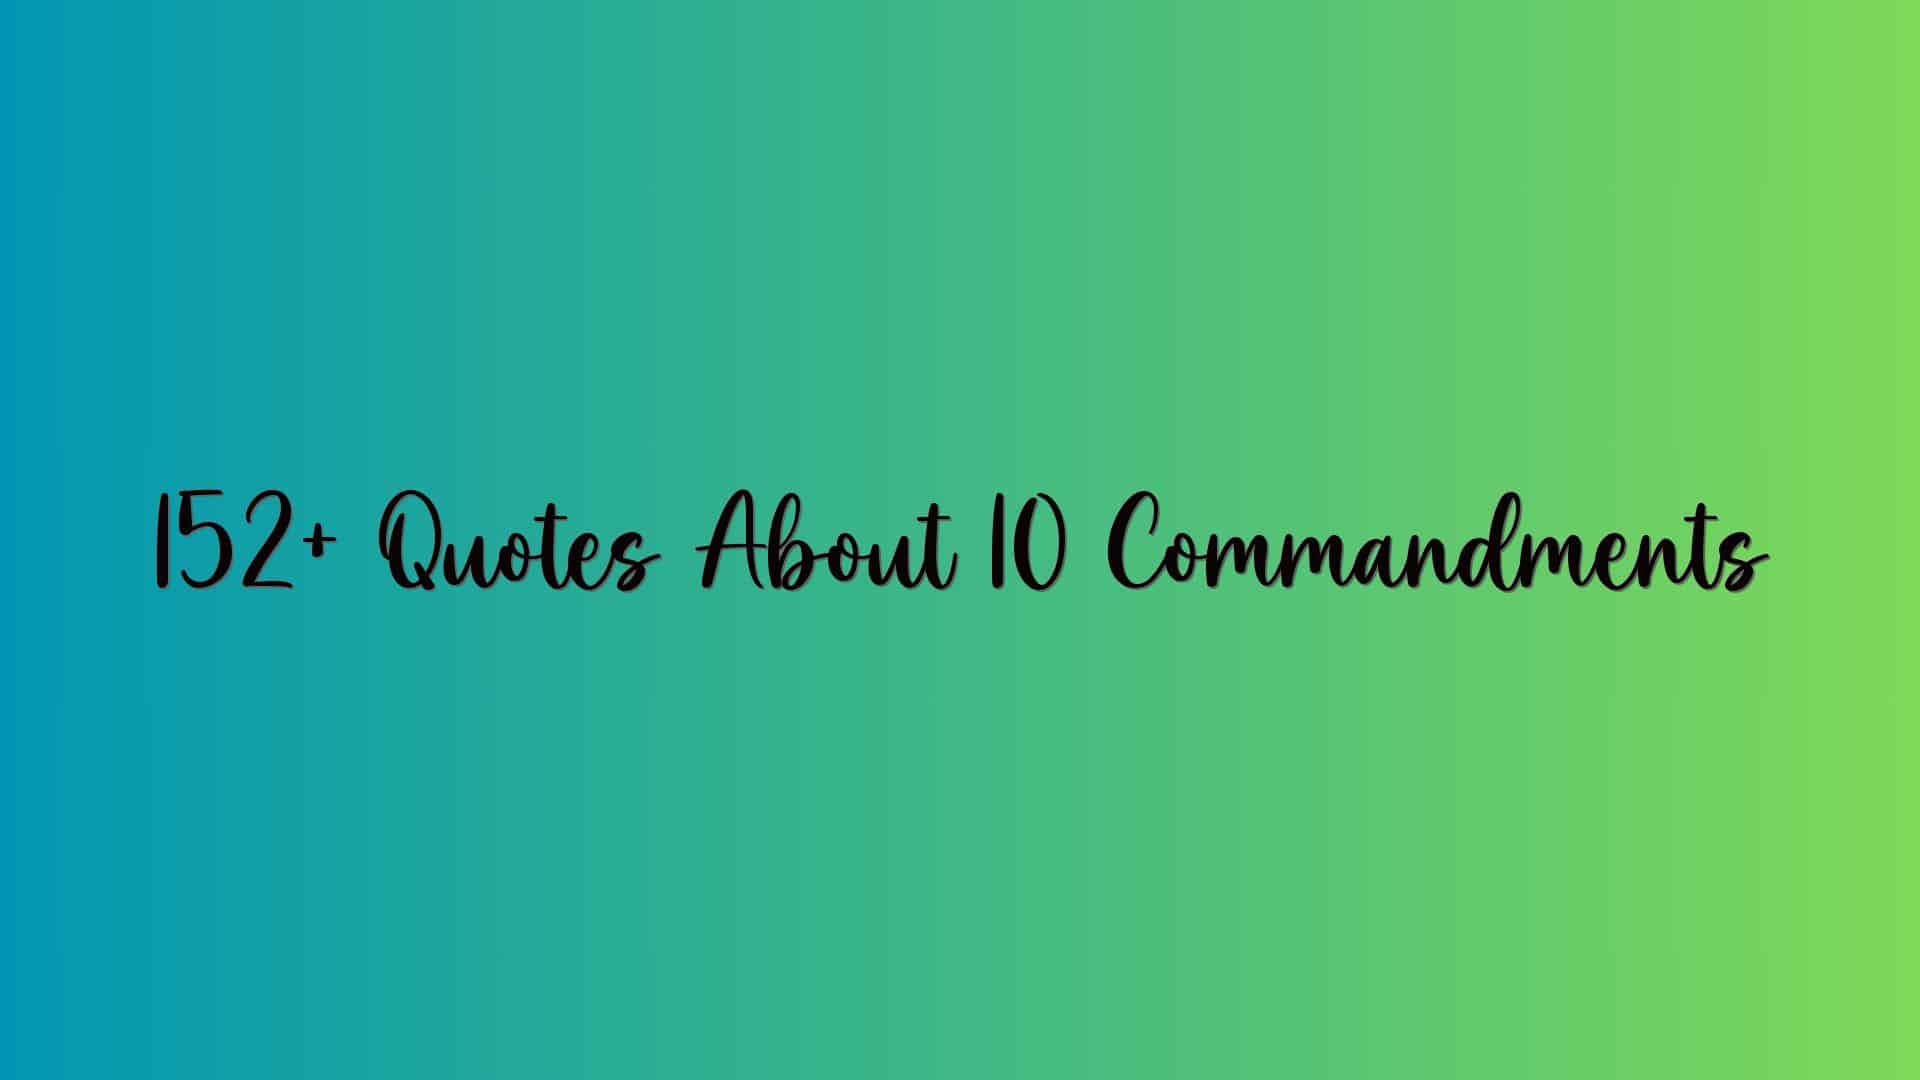 152+ Quotes About 10 Commandments